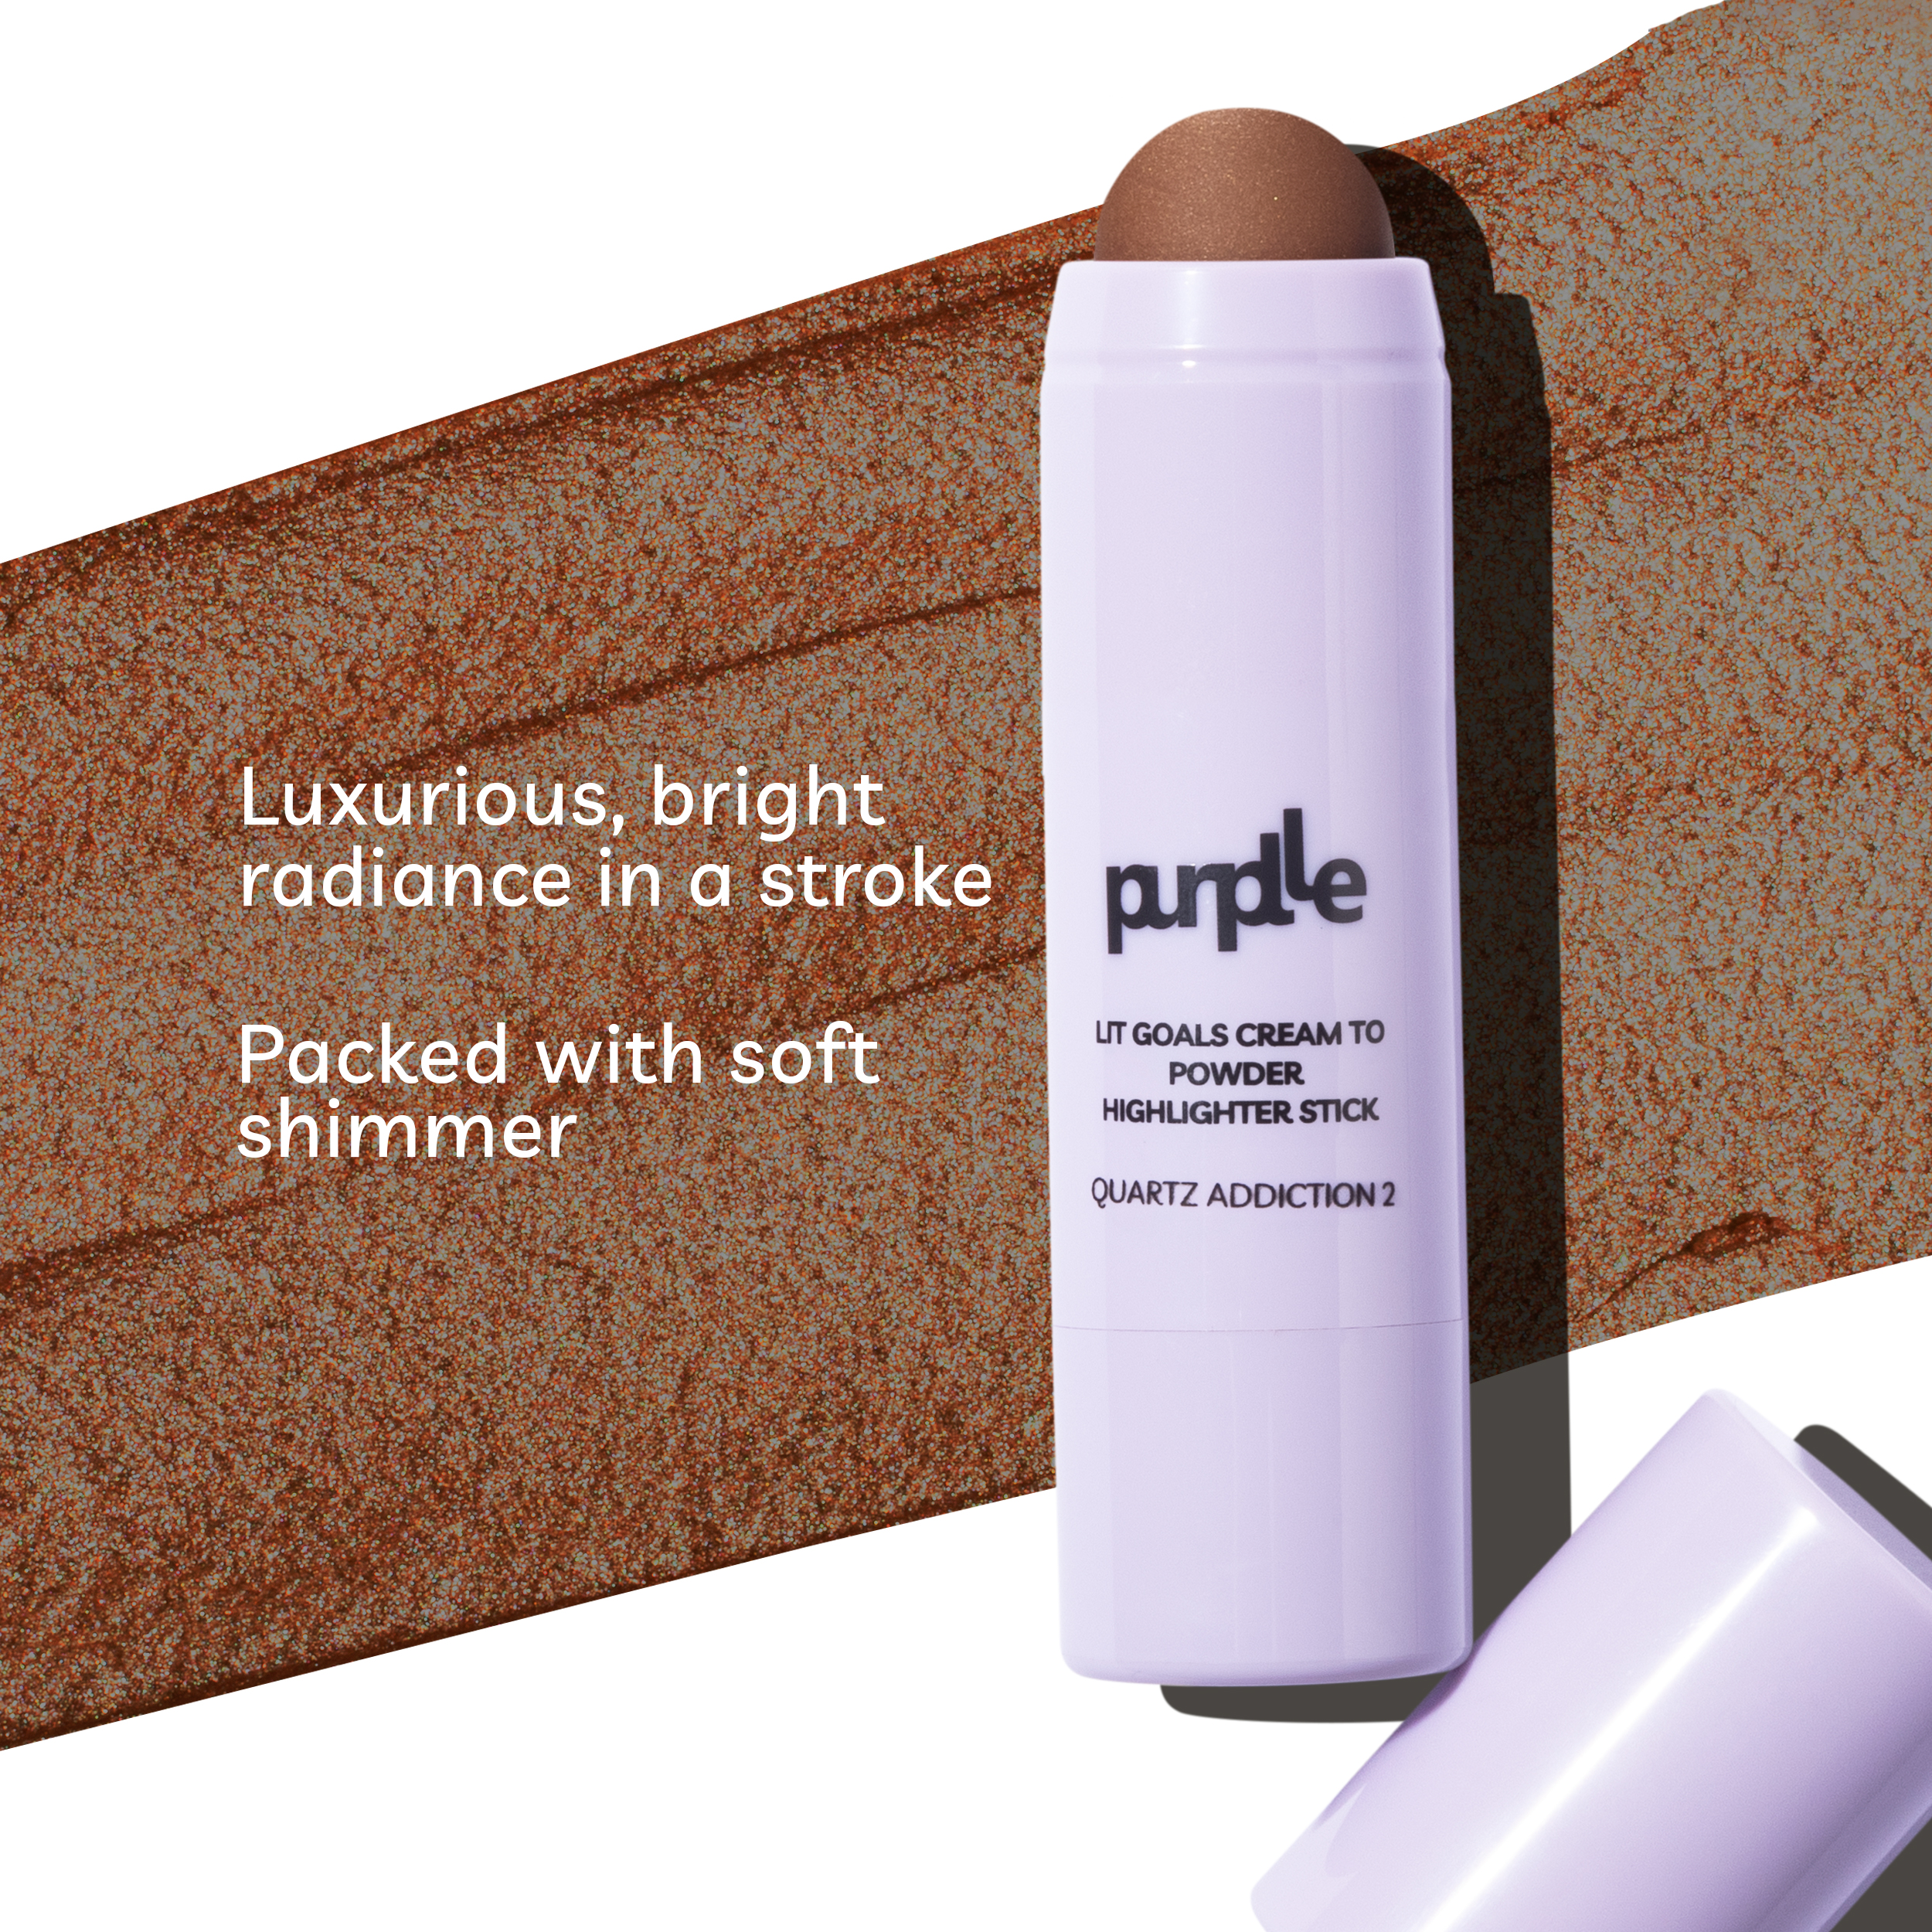 Buy Purplle Lit Goals Cream to Powder Highlighter Stick Quartz Addiction 2 - Purplle